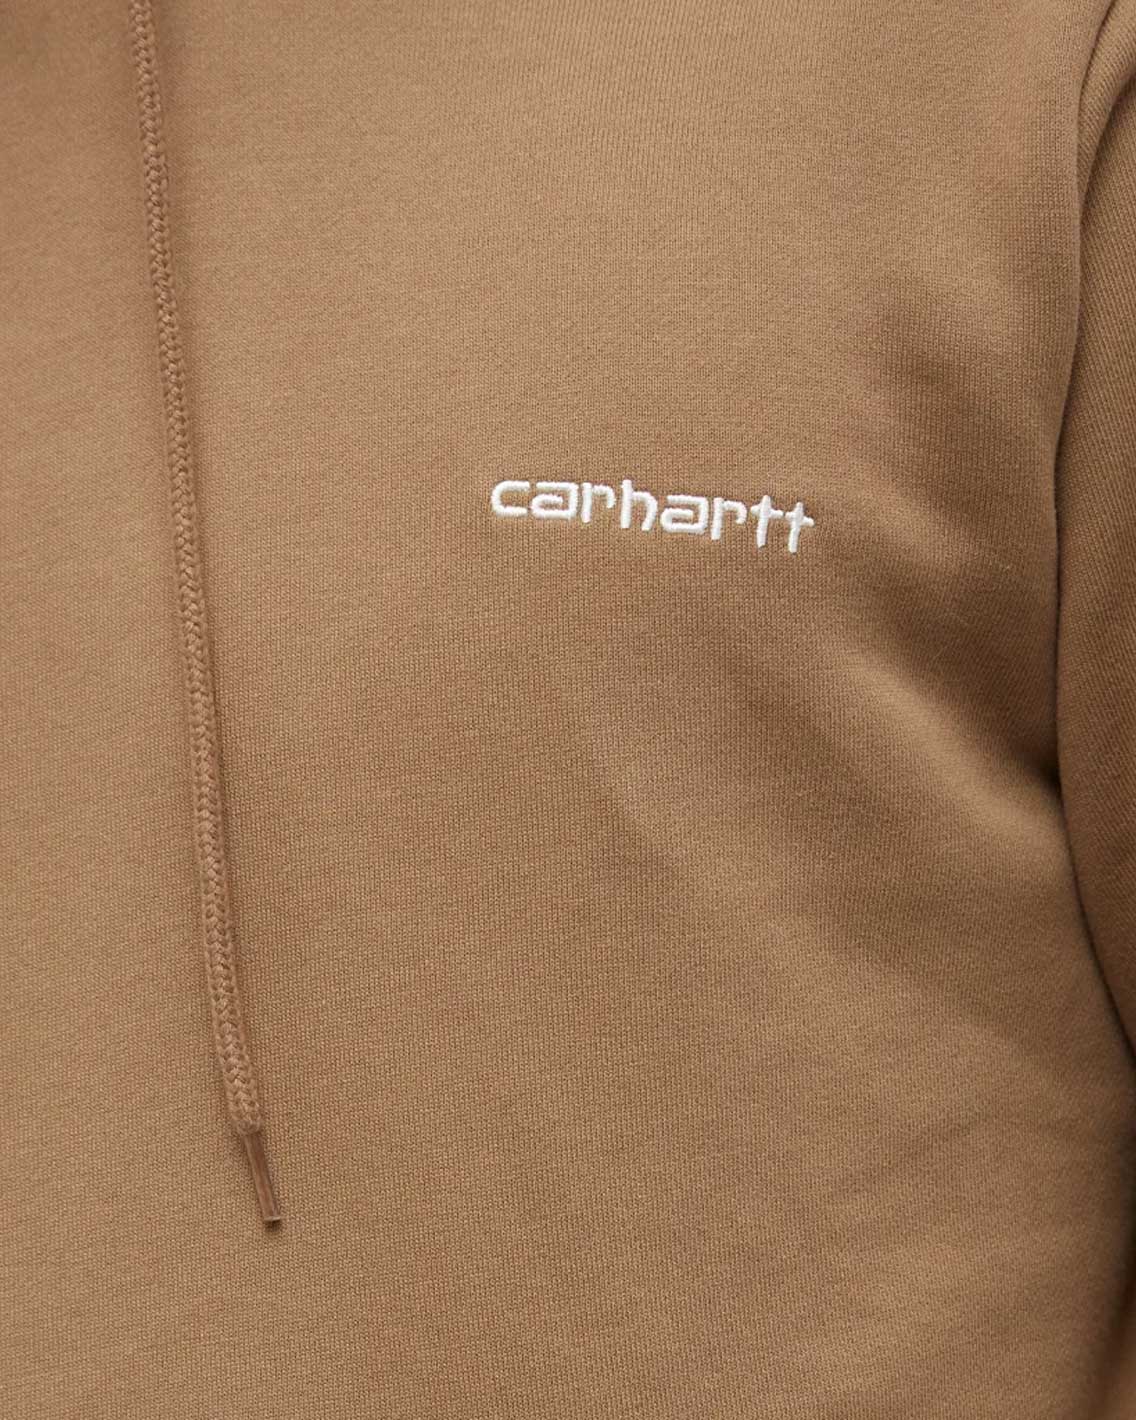 Carhartt - Hooded Script Embroidery Sweat - Buffalo / White